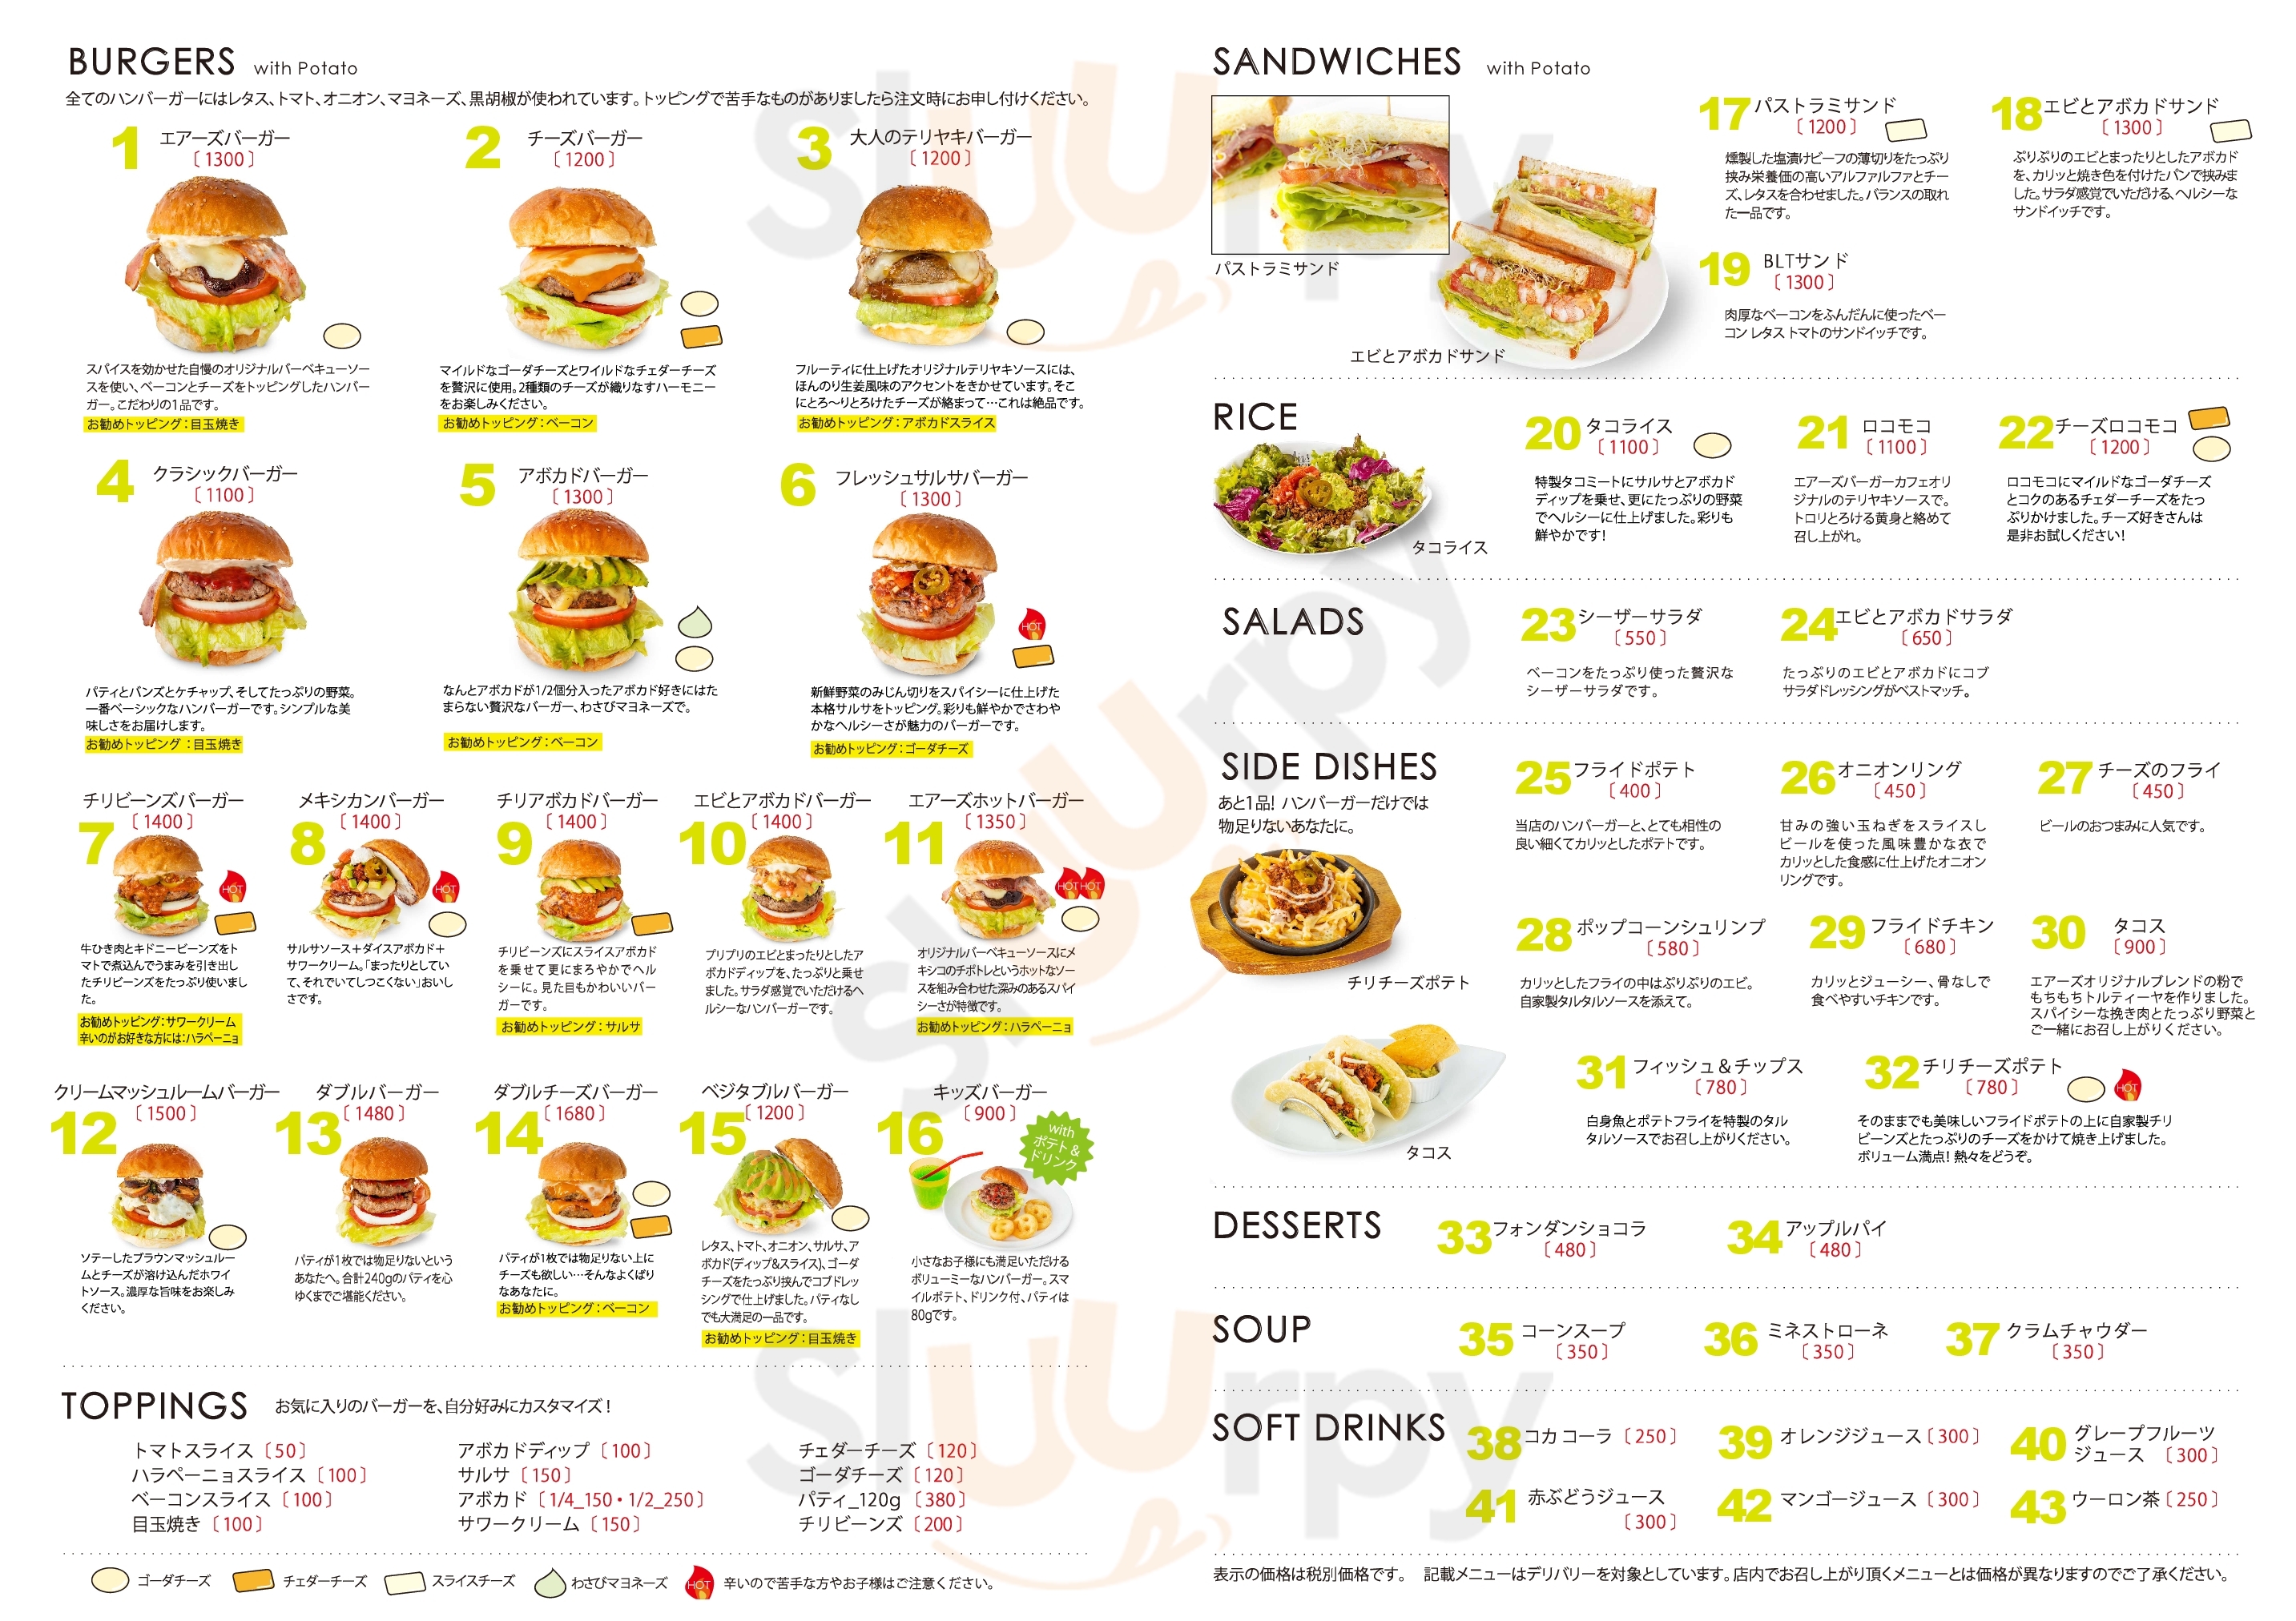 Airs Burger Cafe & Delivery 江東区 Menu - 1